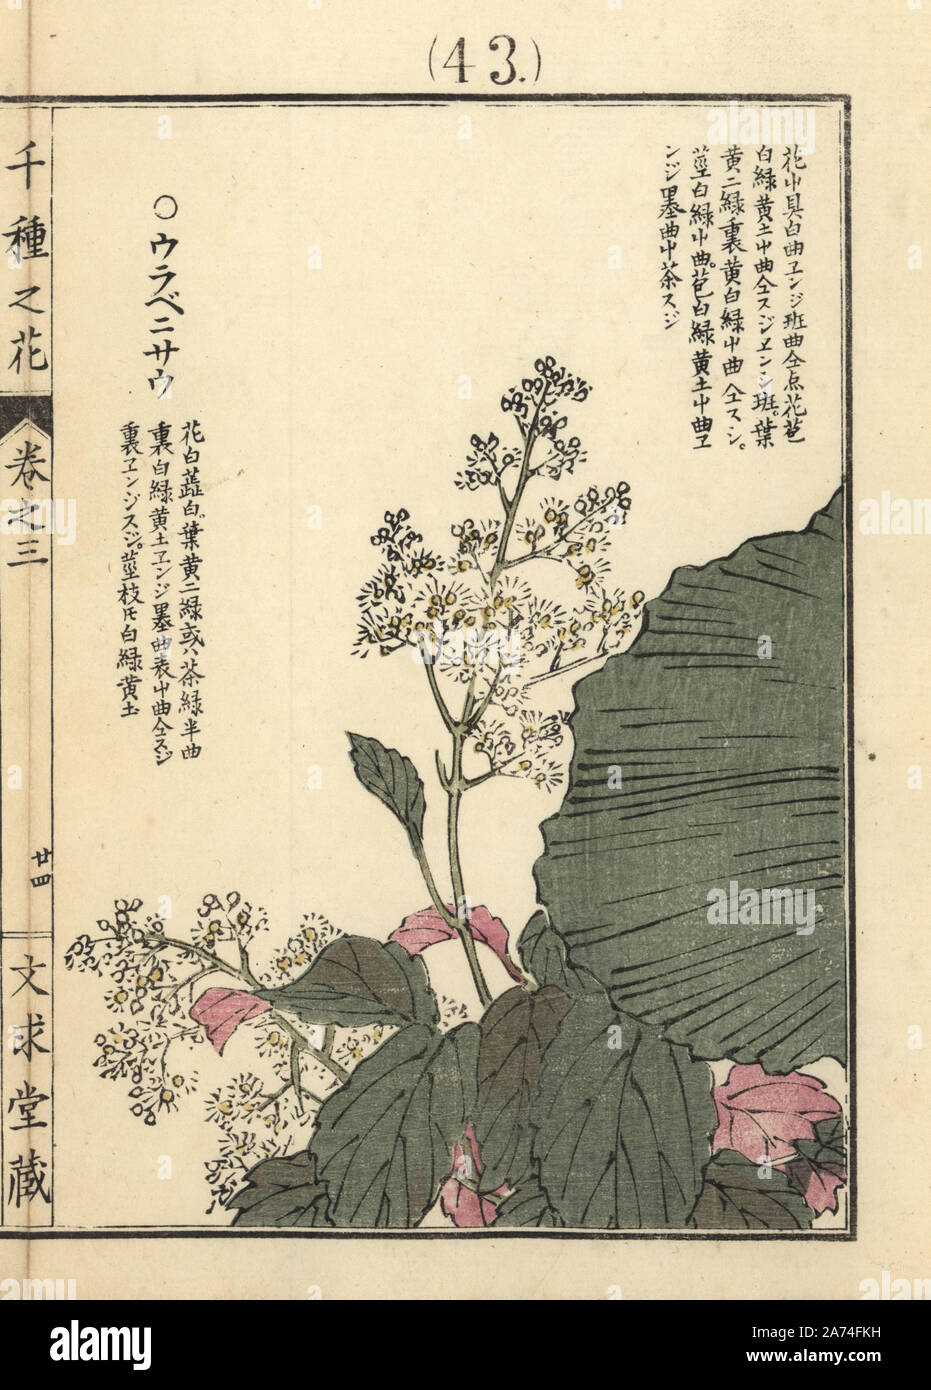 Urabenisou. Unknown species of plant with red backed foliage. Handcoloured woodblock print by Kono Bairei from Senshu no Hana (One Thousand Varieties of Flowers), Bunkyudo, Kyoto, 1889. Stock Photo